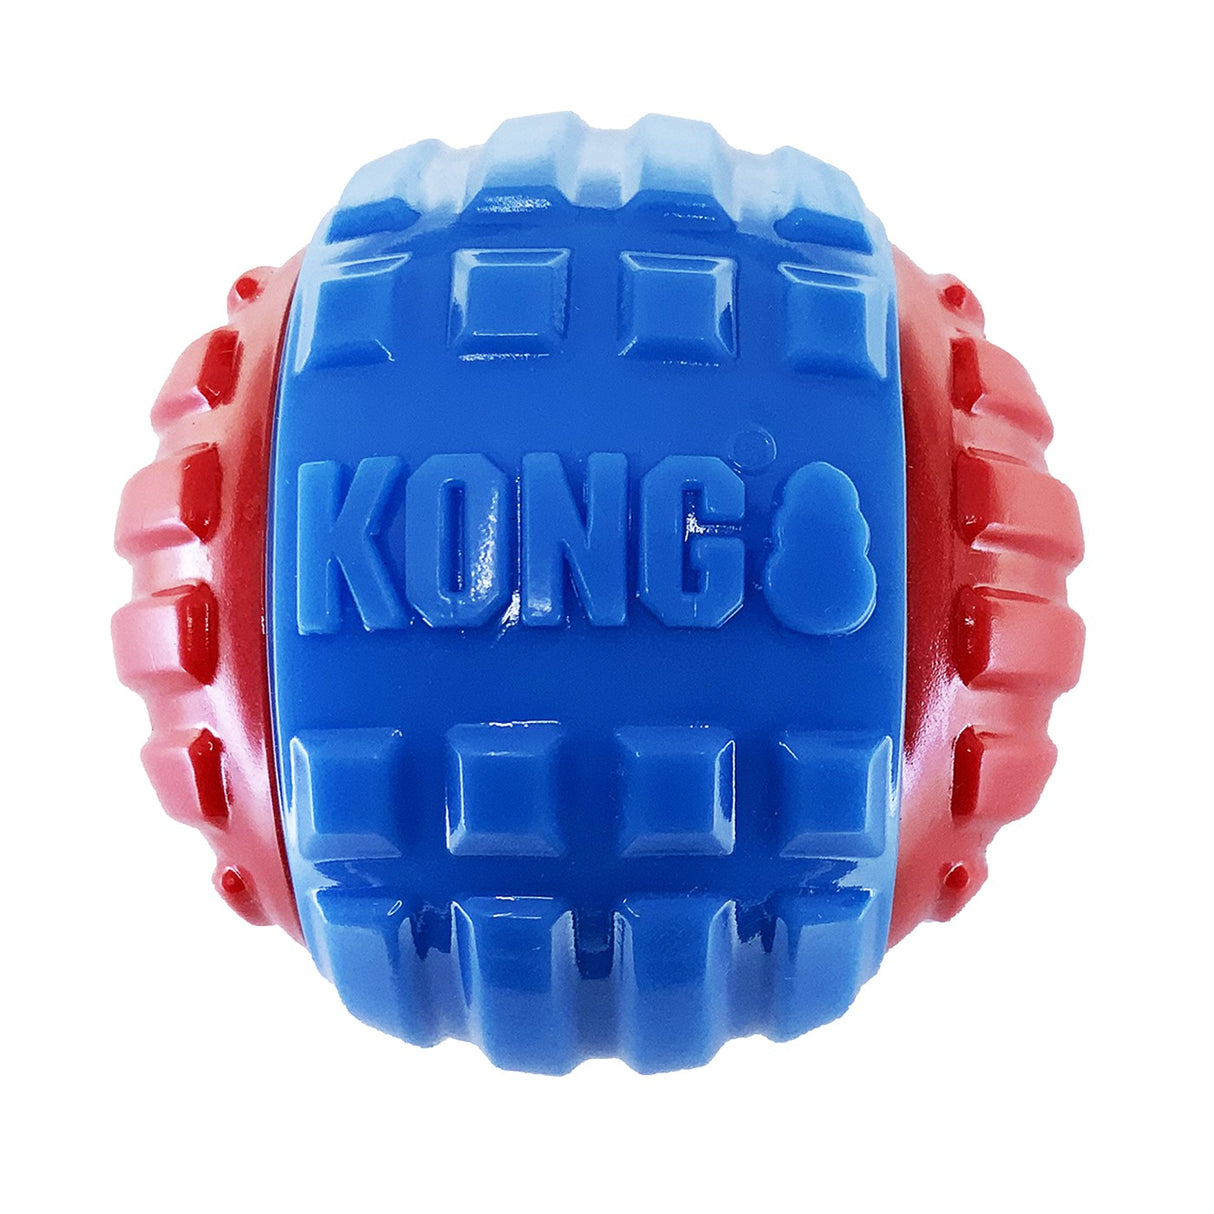 Kong Core Strength Rattlez Ball Dog Toy